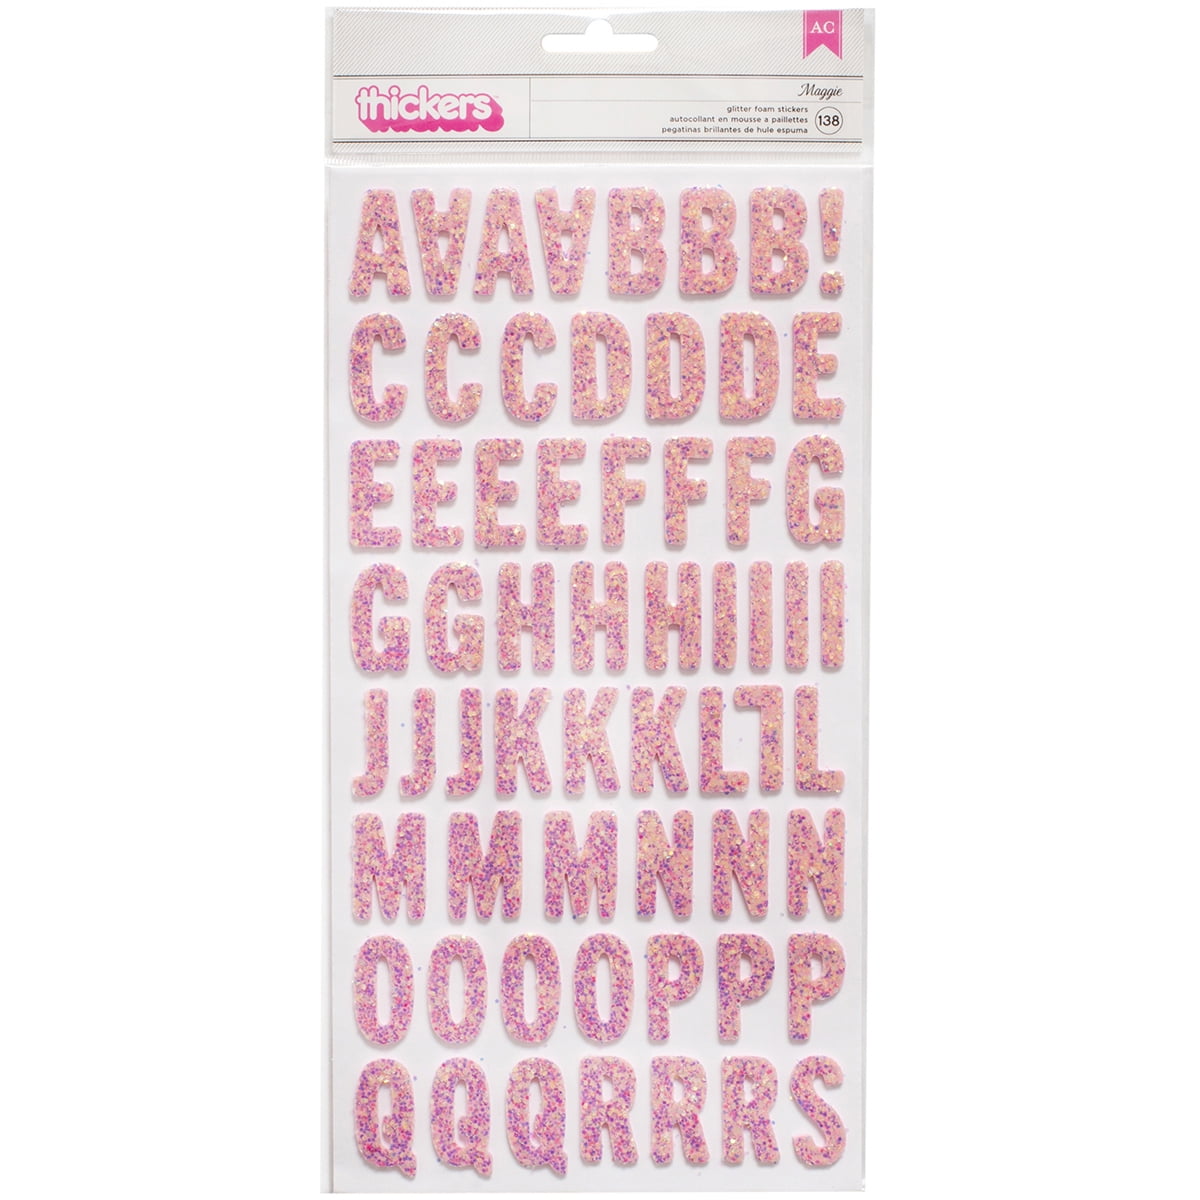 Rose Pink Metallic Glitter Handcut 1.5 Chipboard Uppercase Letters Alphabet Set 60 Pieces Stickers